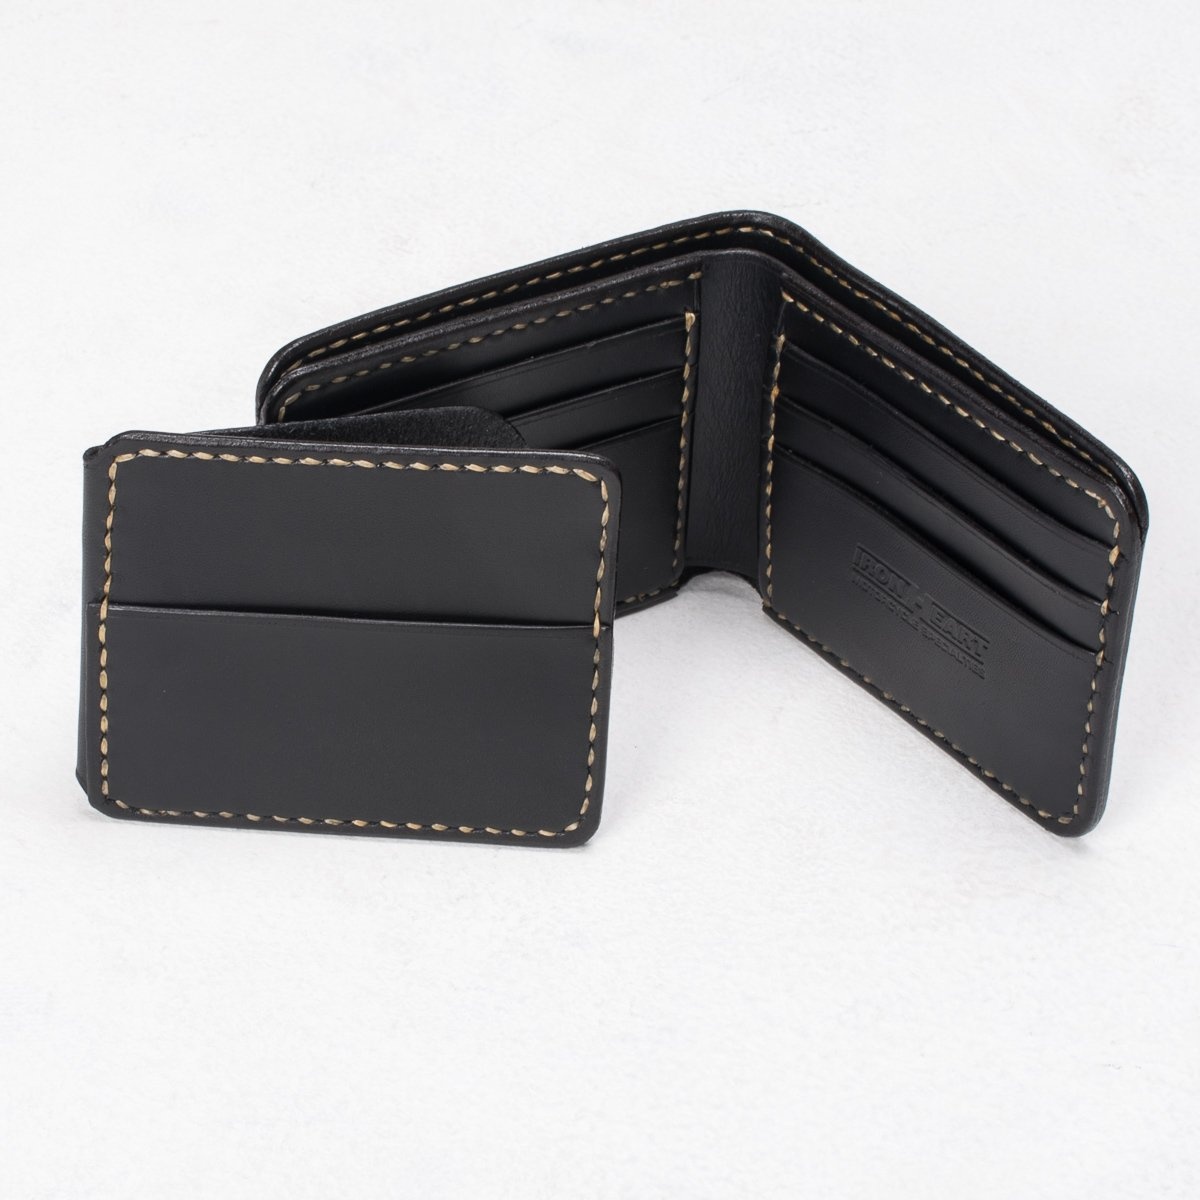 IHG-035 Calf Folding Wallet - Black or Tan - 10